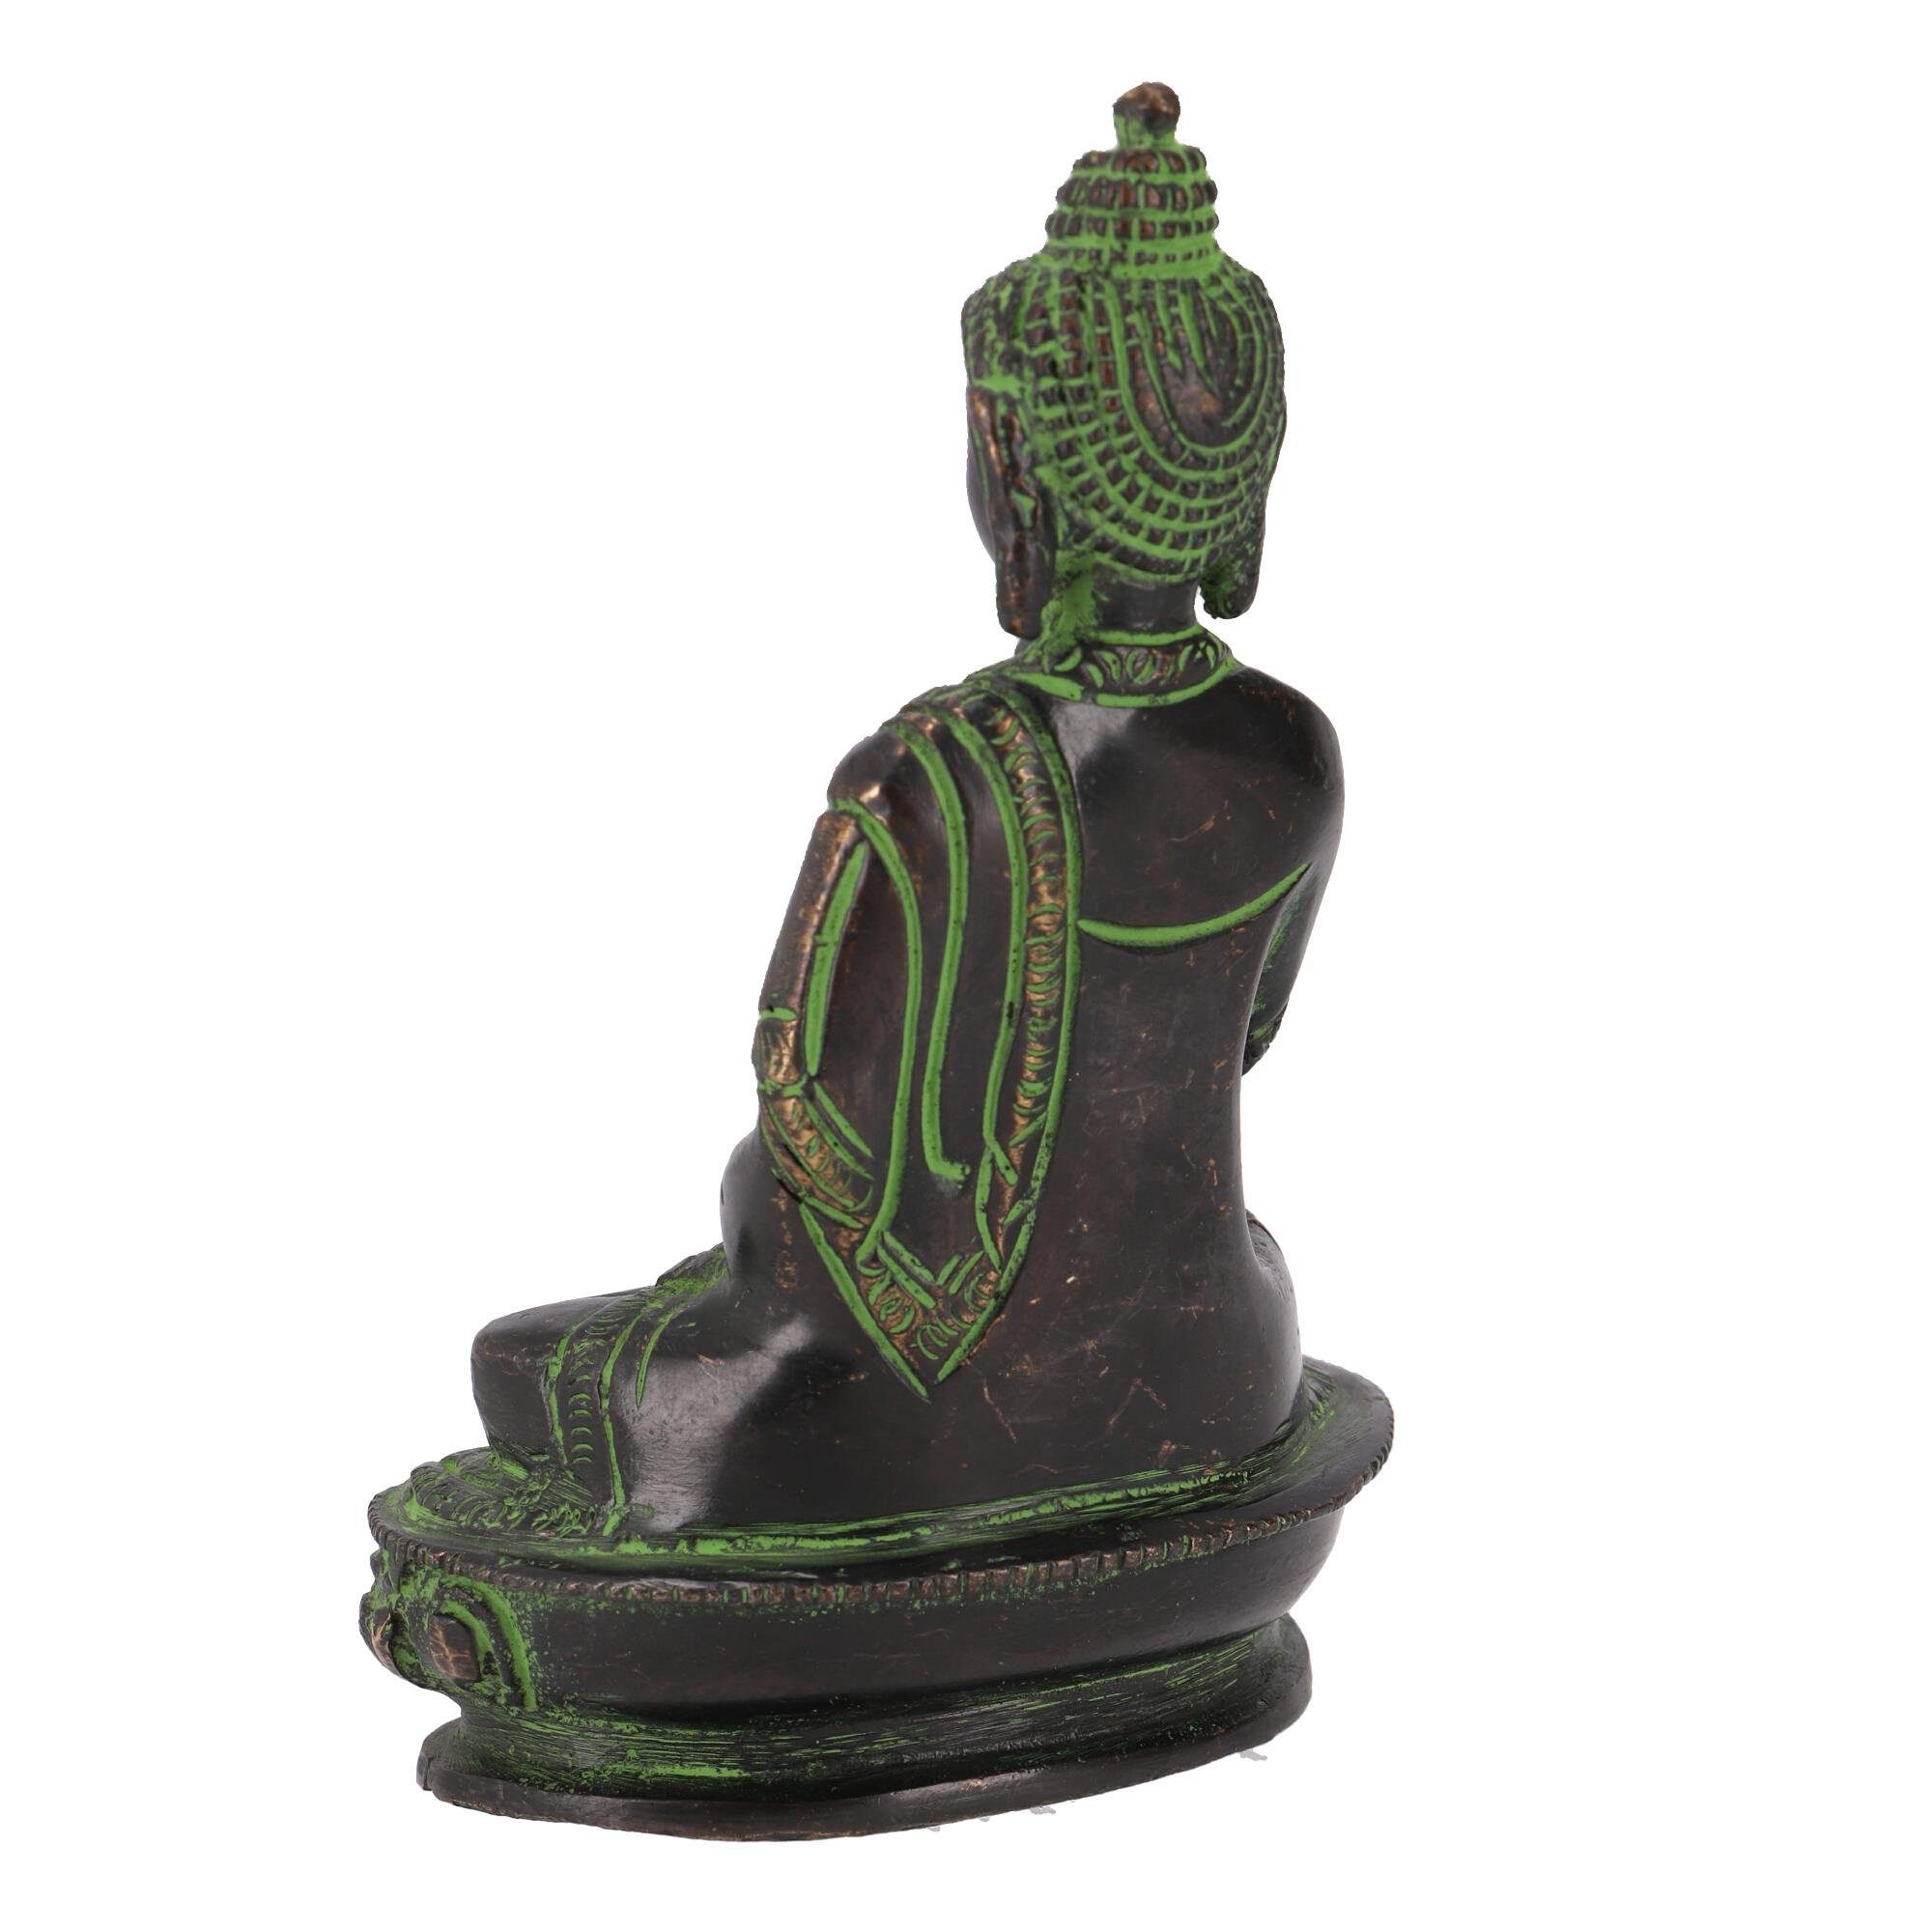 Messing aus Amoghasiddhi Guru-Shop Buddhafigur Buddha.. Statue Buddha